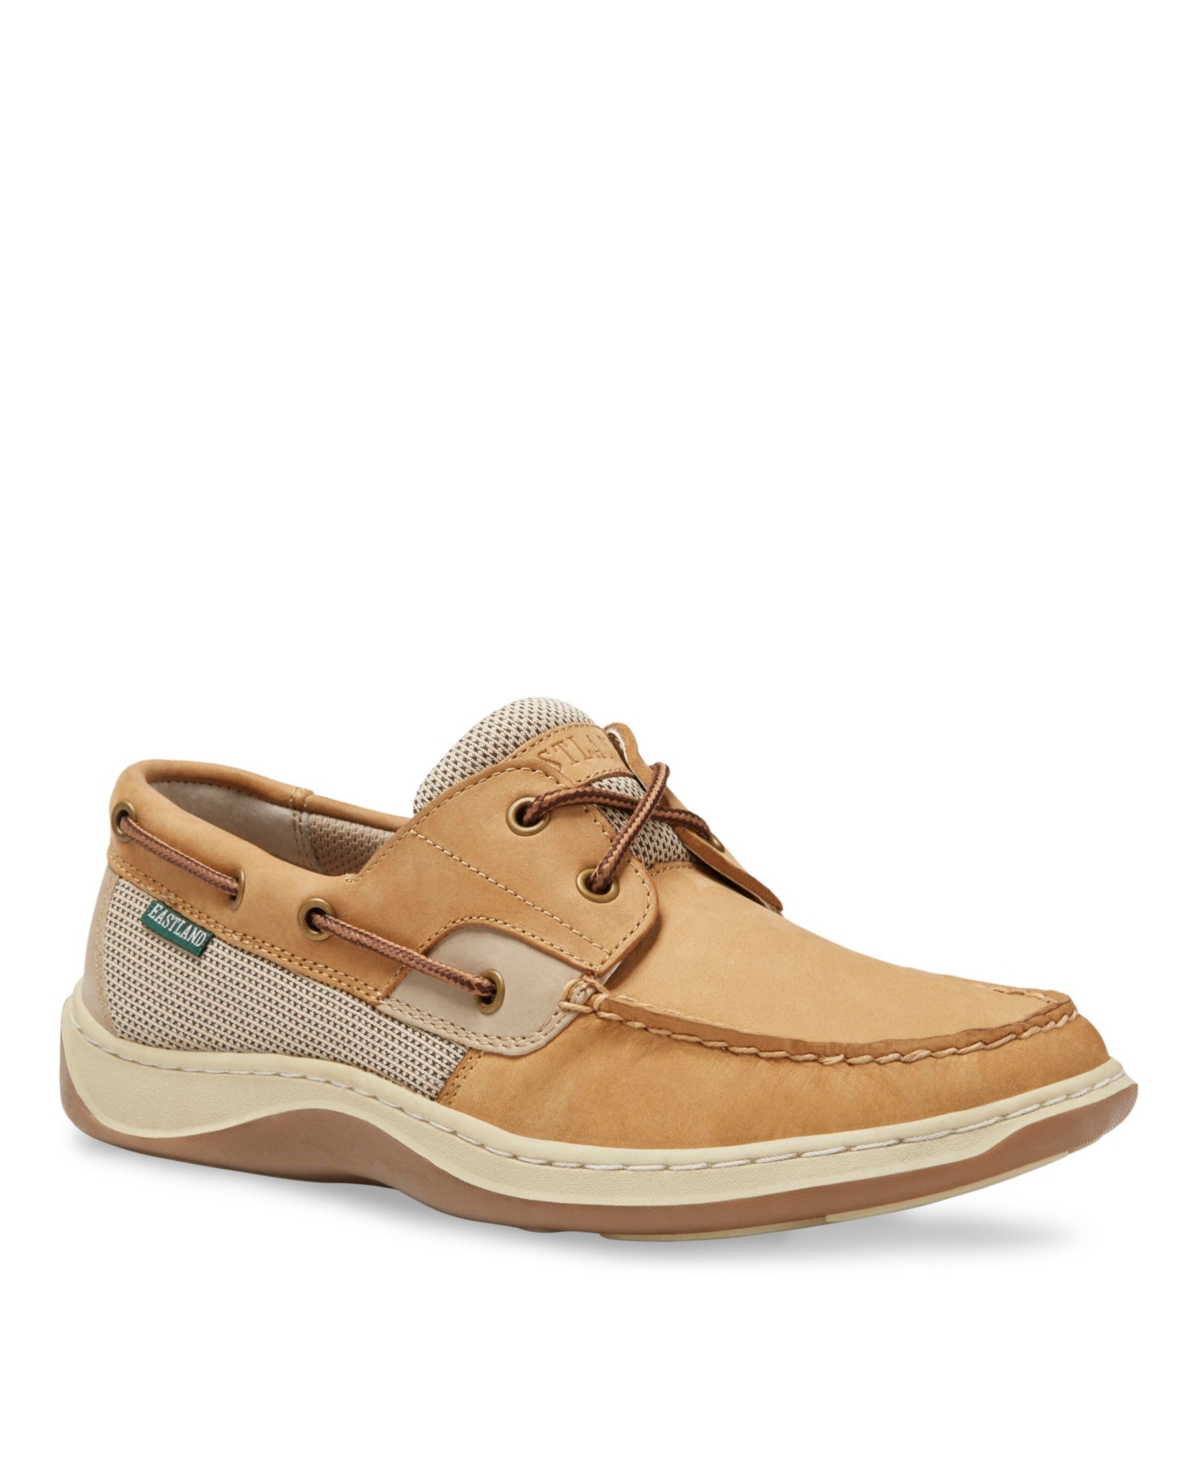 Men's Solstice Boat Shoes - Tan